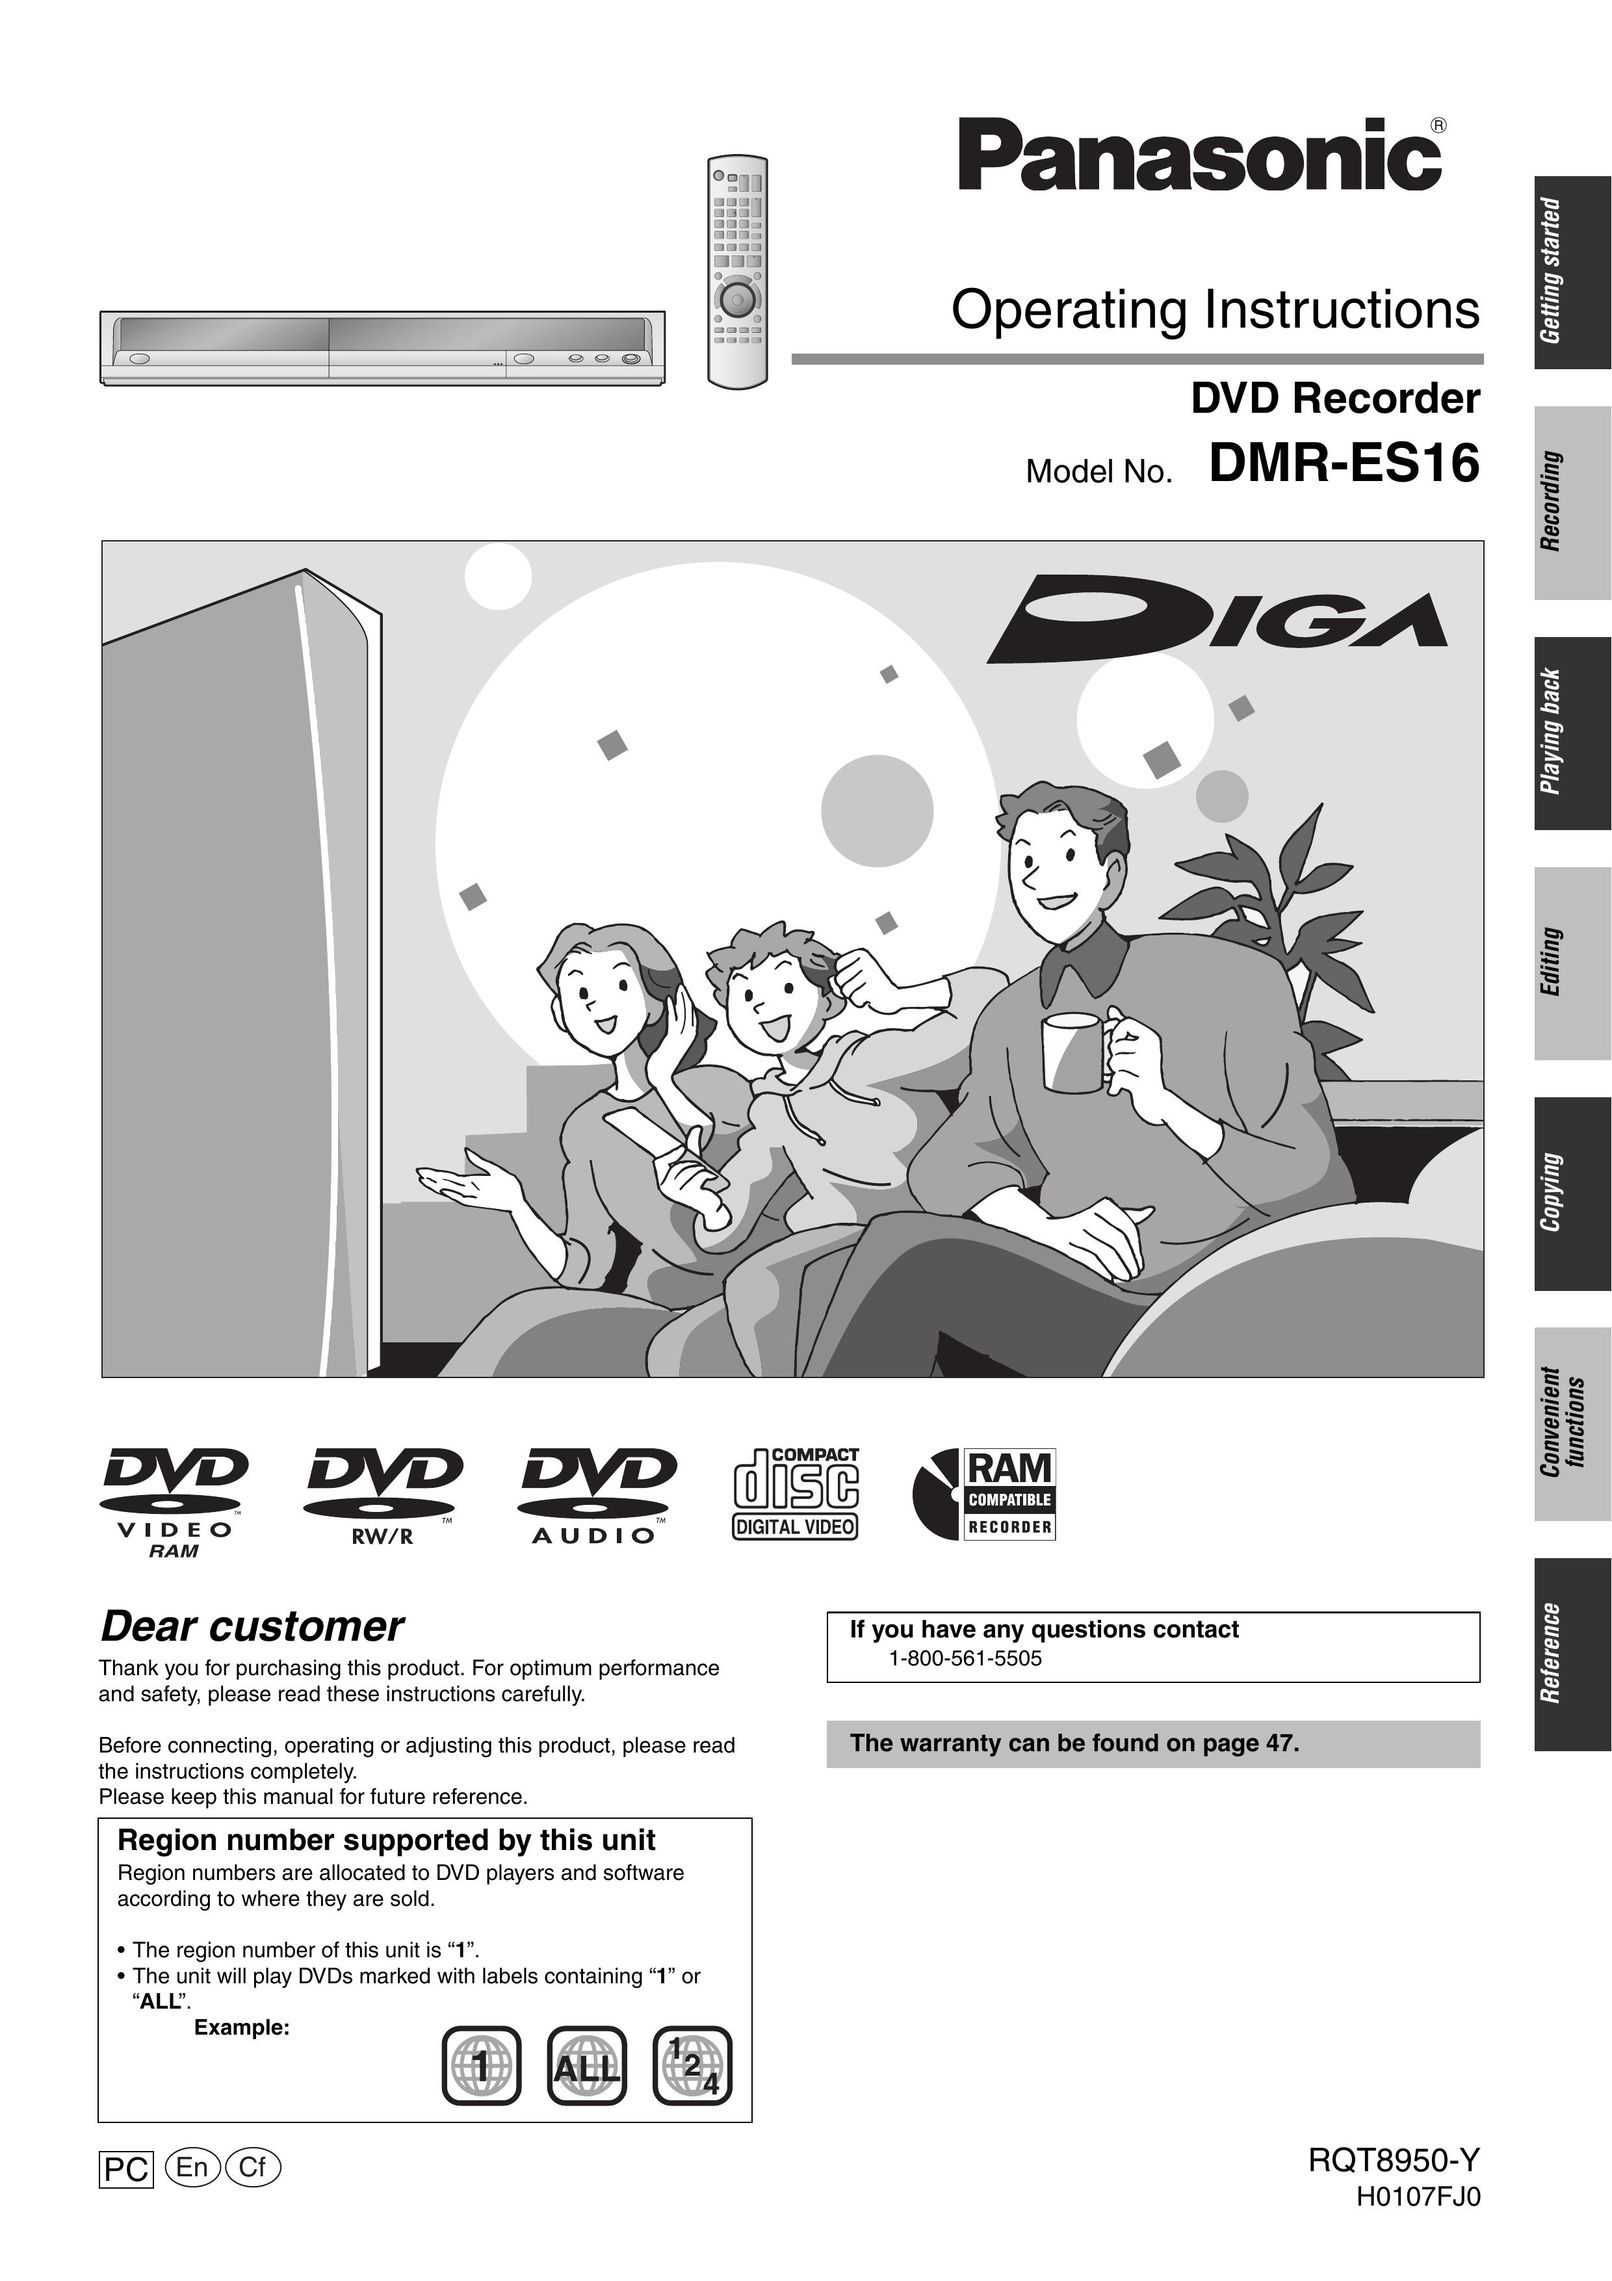 Panasonic DMR-ES16 DVD Recorder User Manual